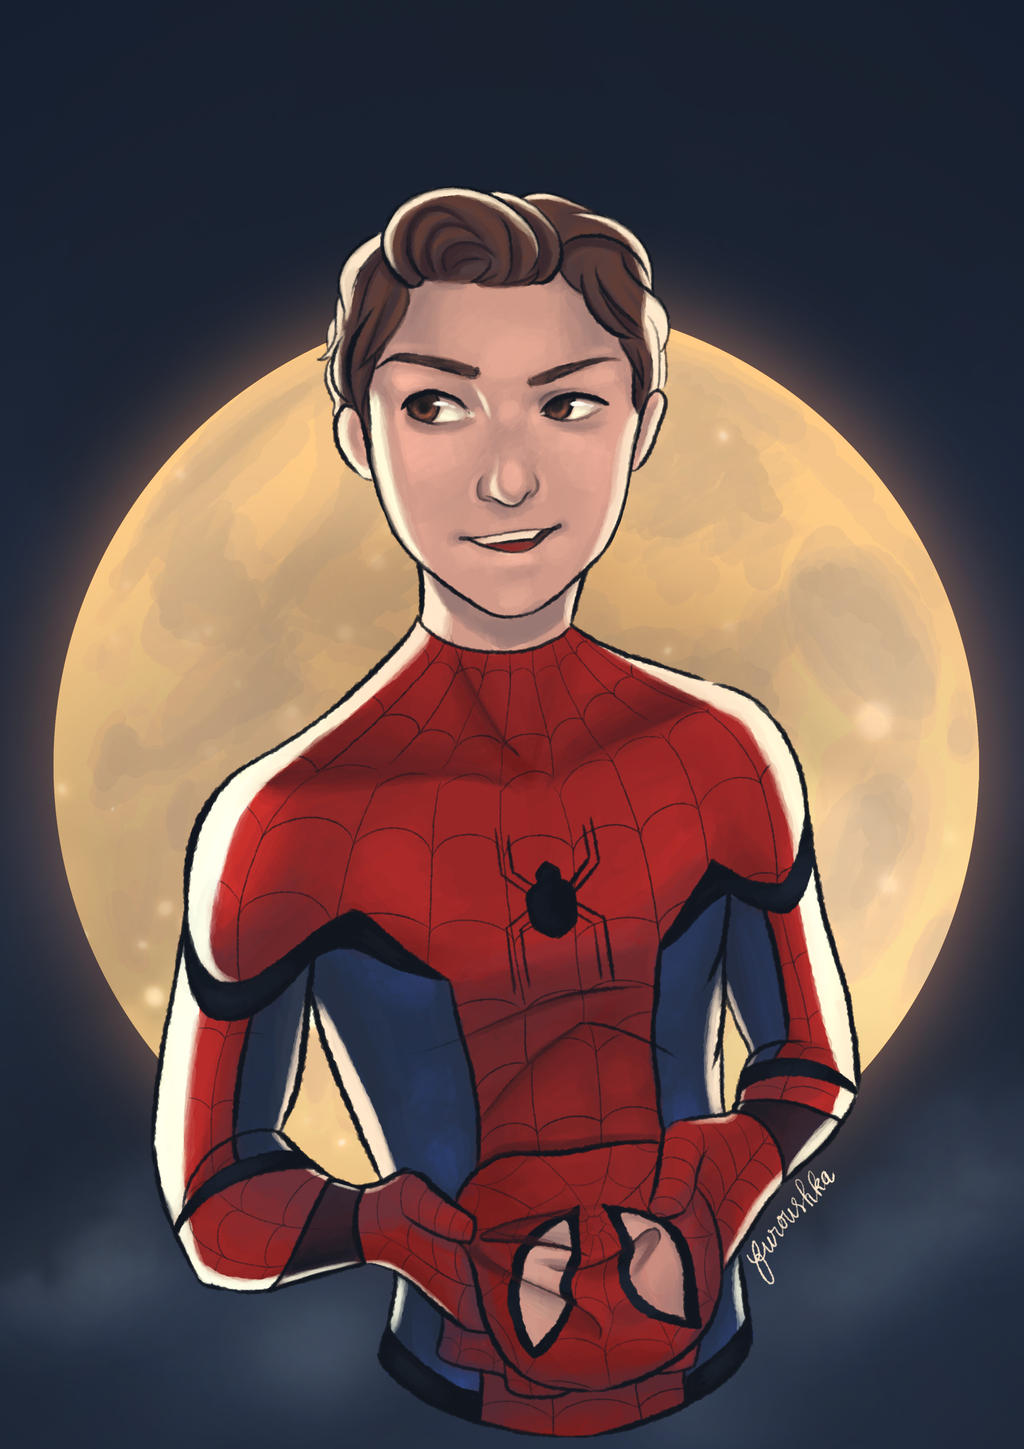 Tom Holland's Spiderman by furoushka on DeviantArt